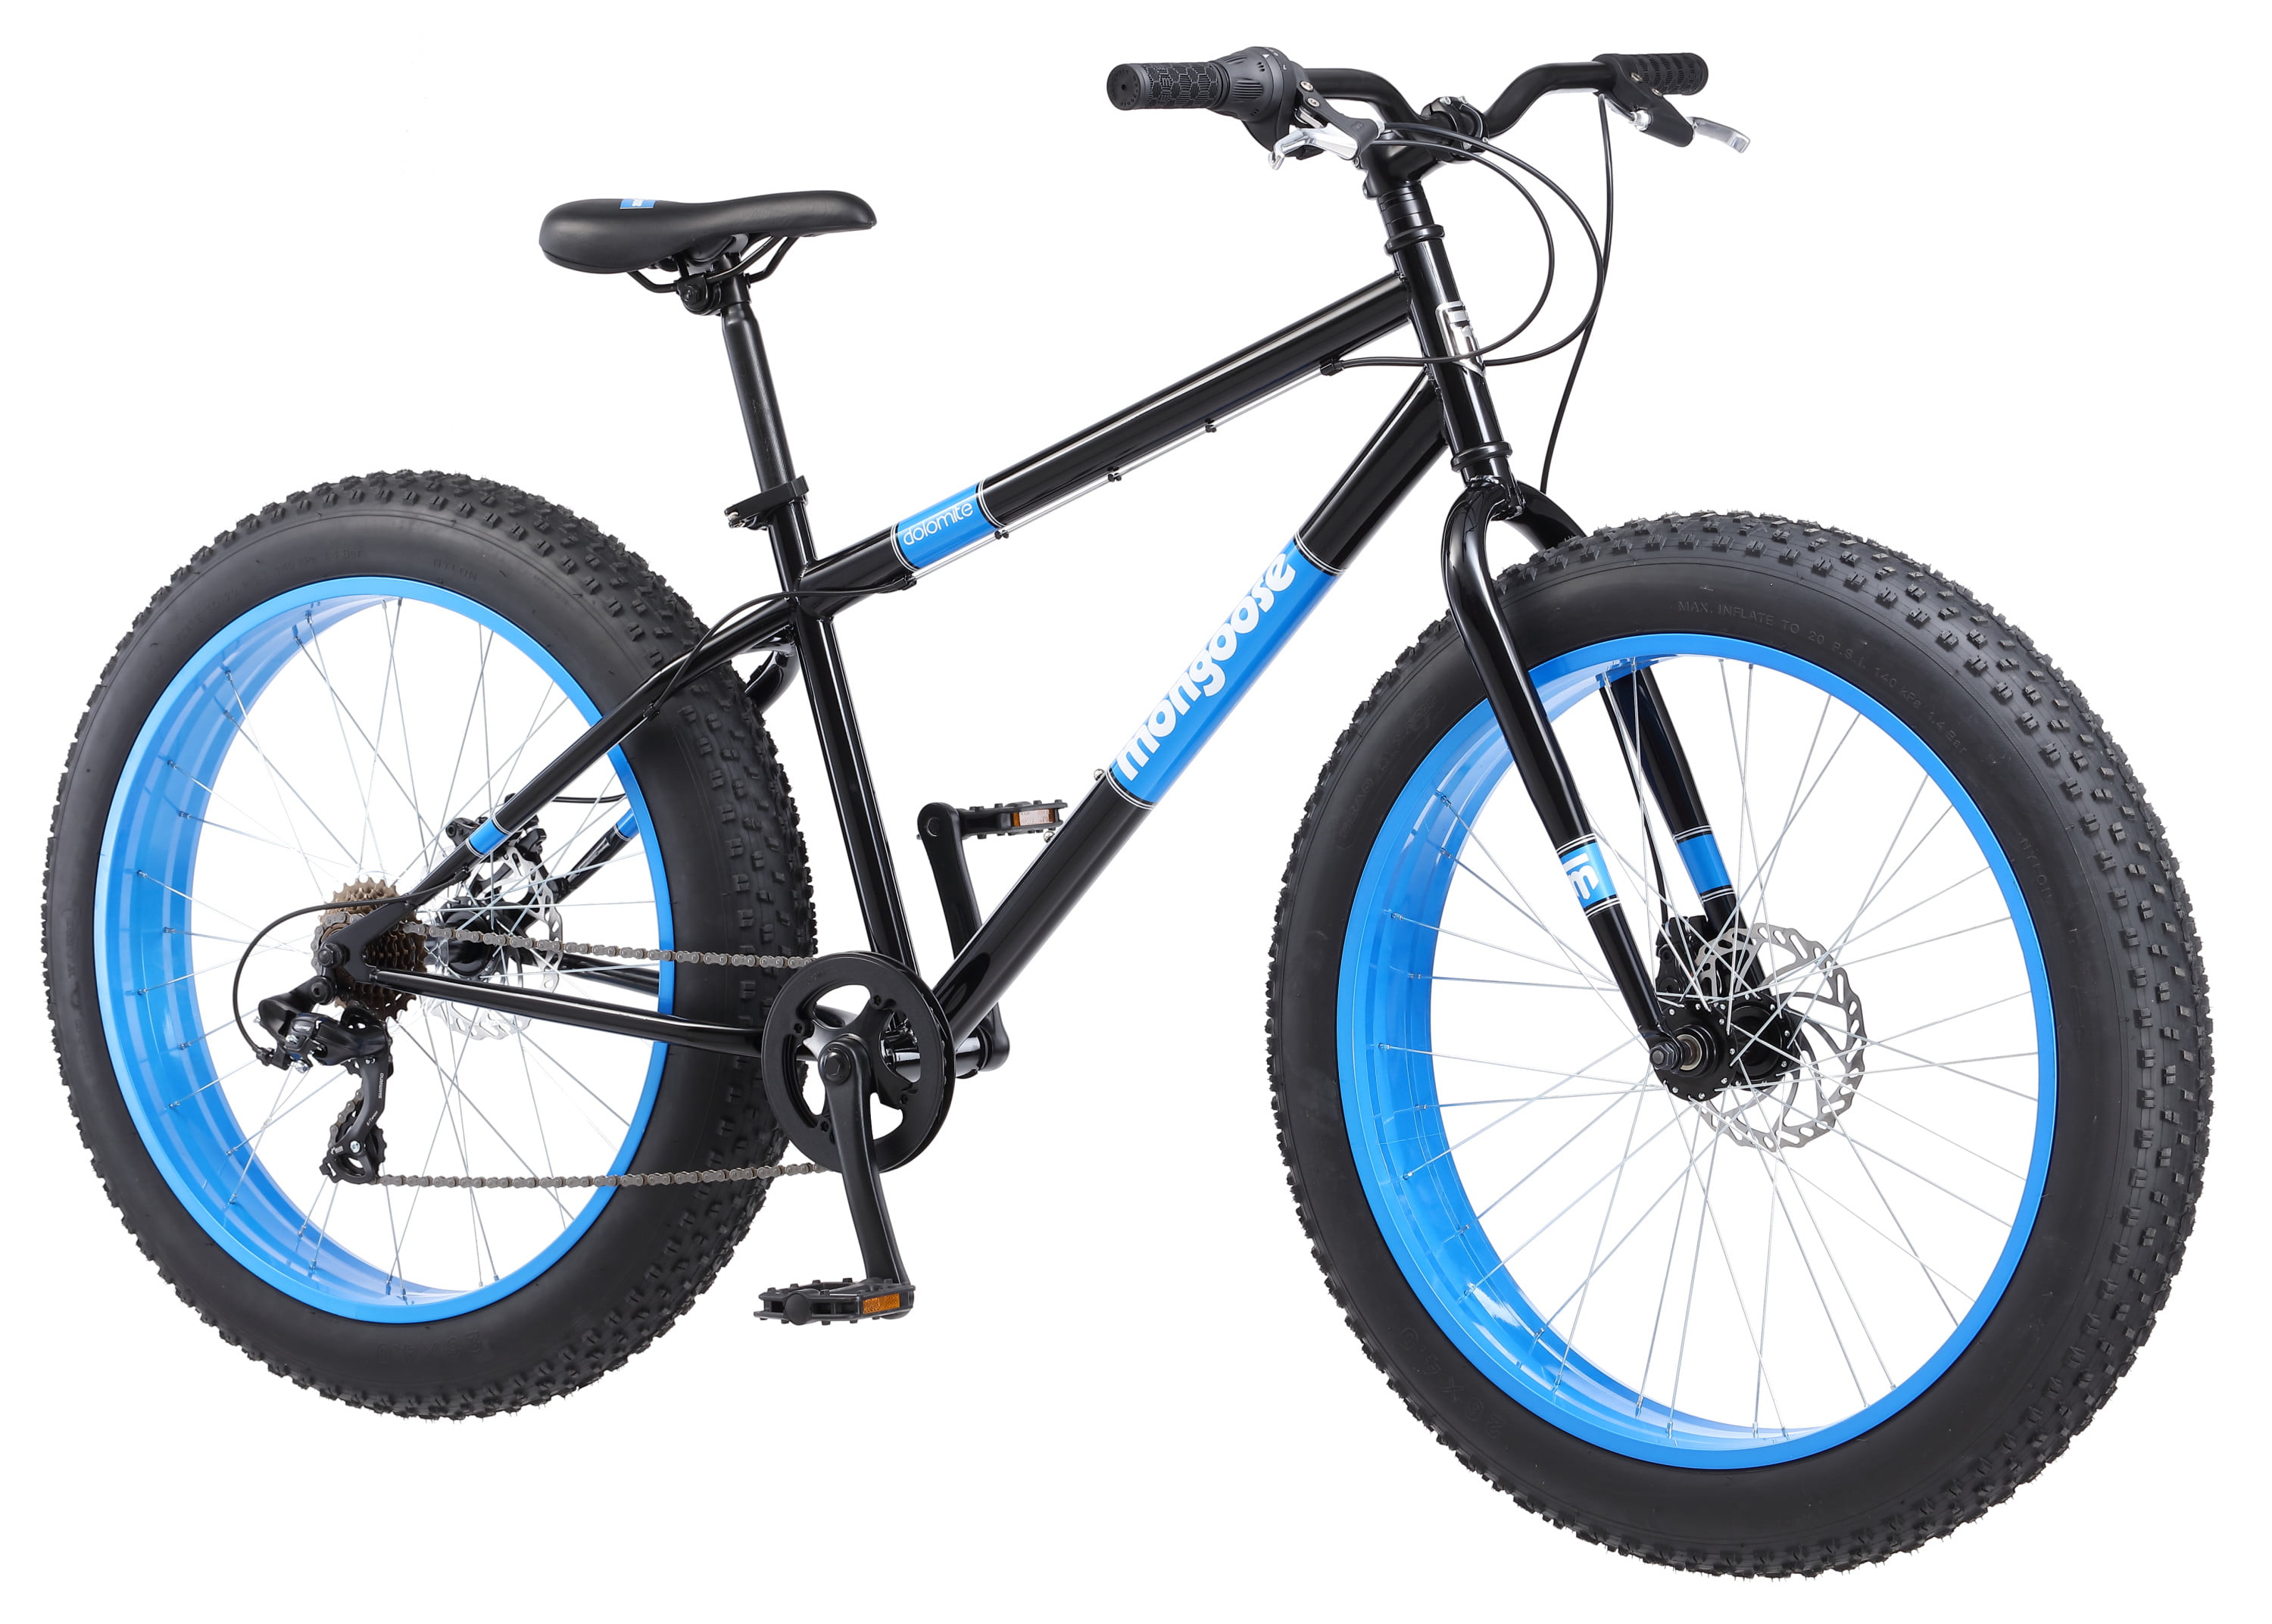 26" Mongoose Dolomite Men's Fat Tire Bike, Black 38675414426 eBay